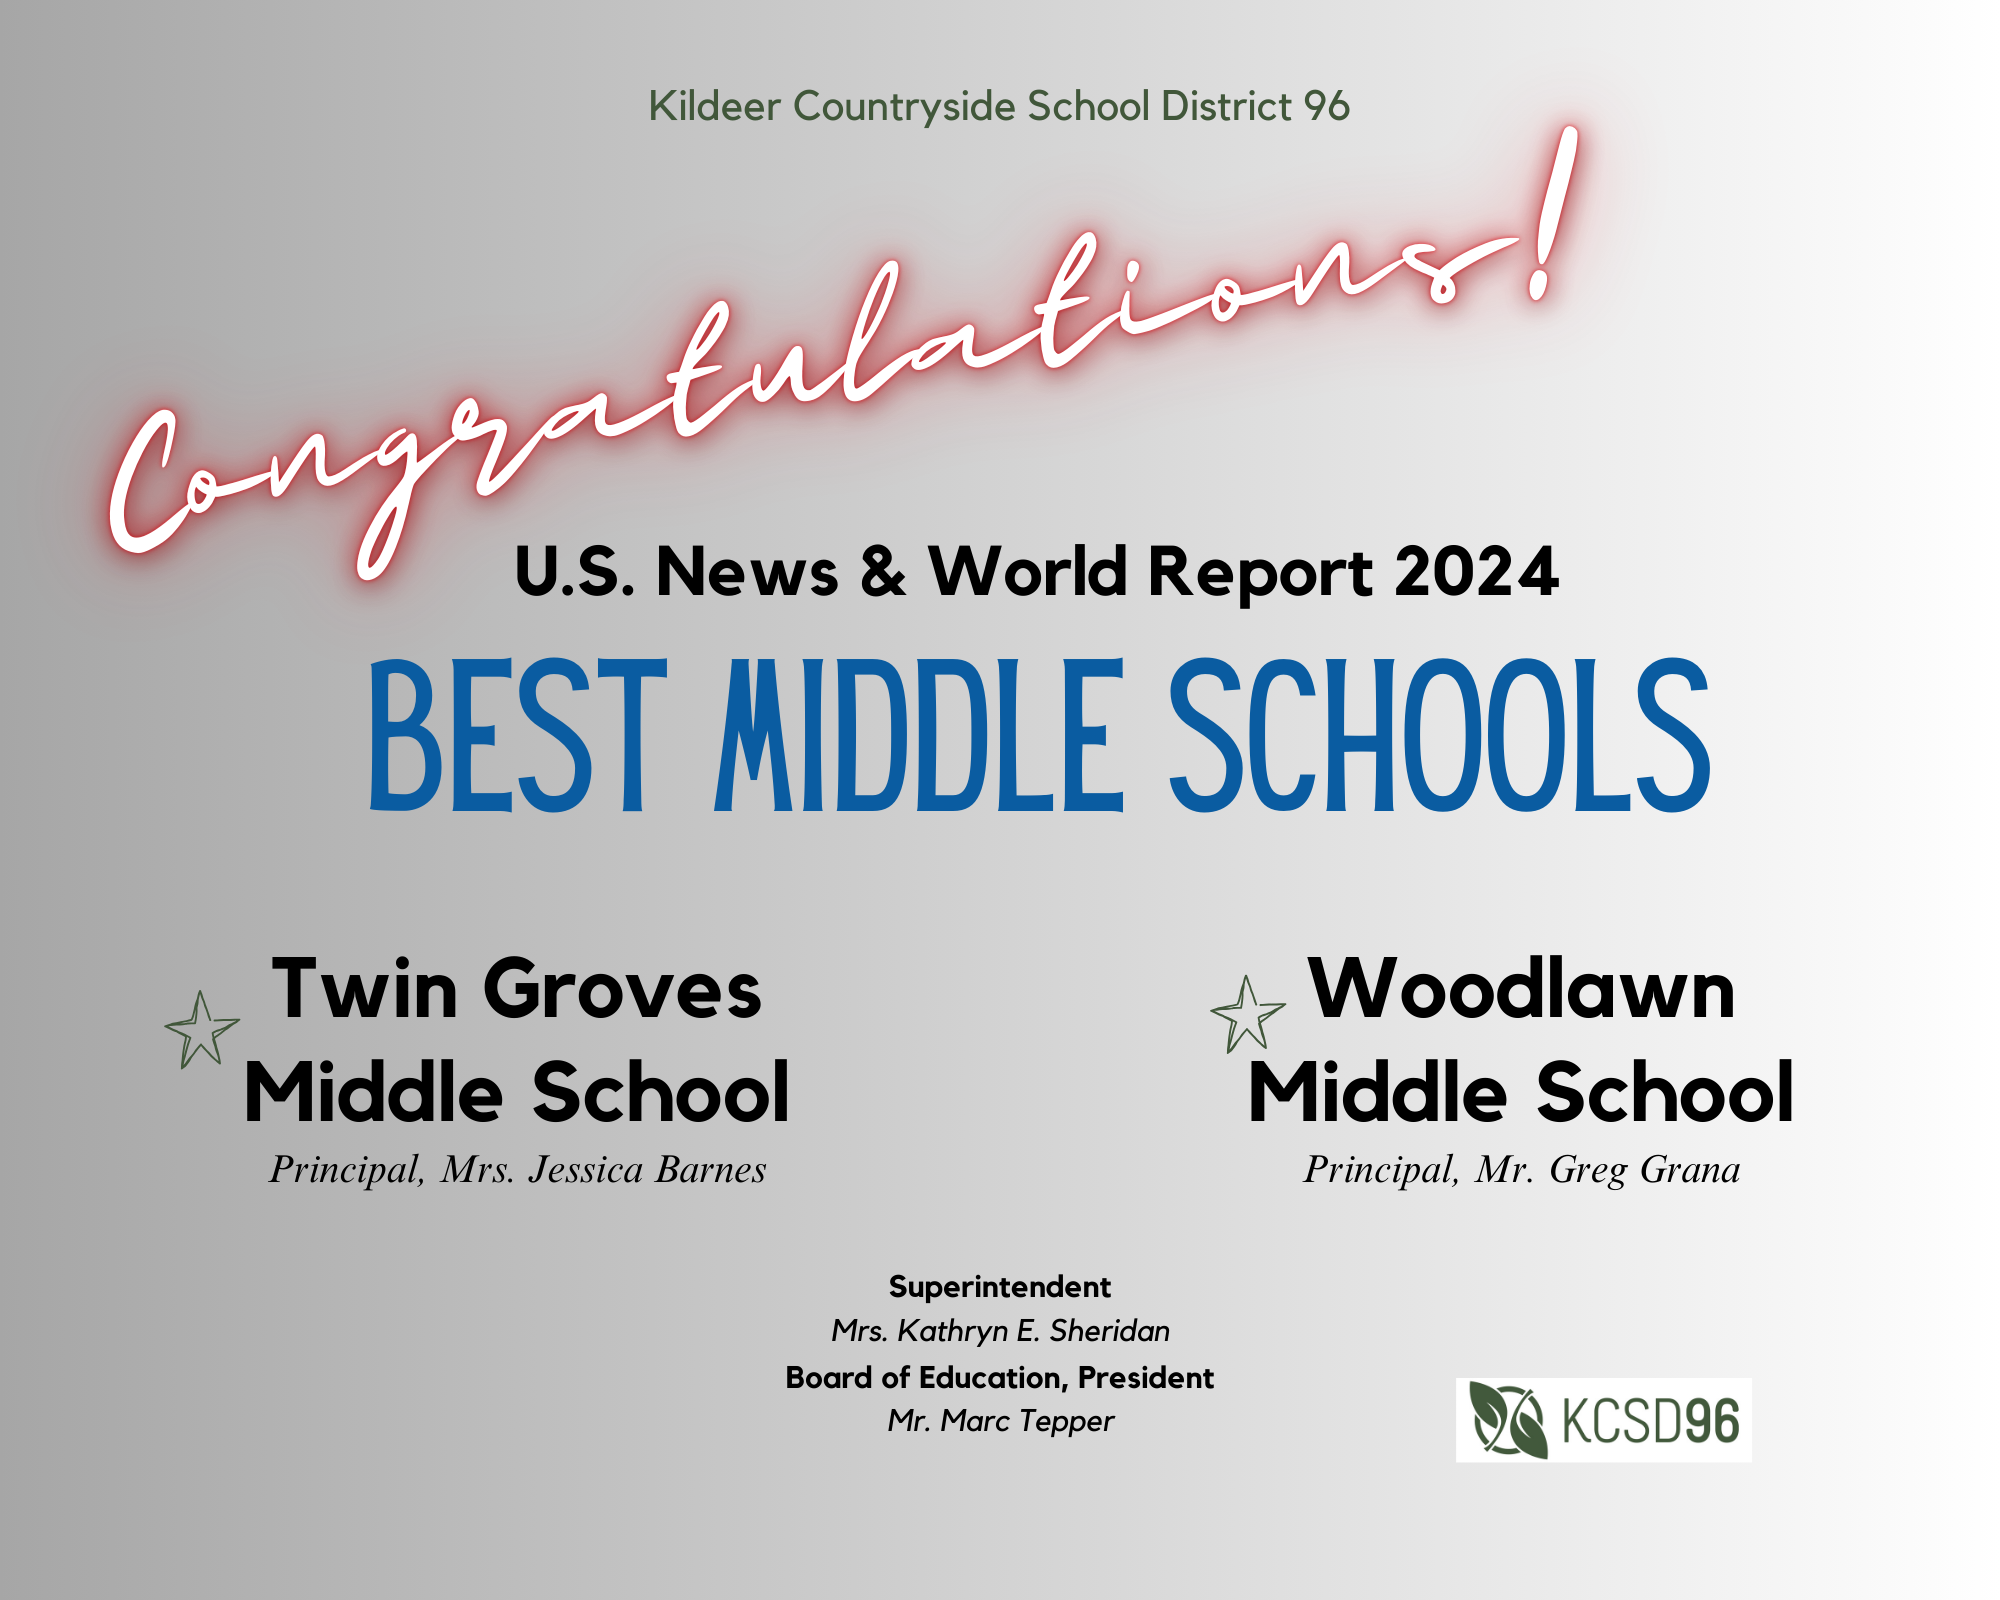 U.S. News & World Report's "Best Middle Schools" ~ November 14, 2023